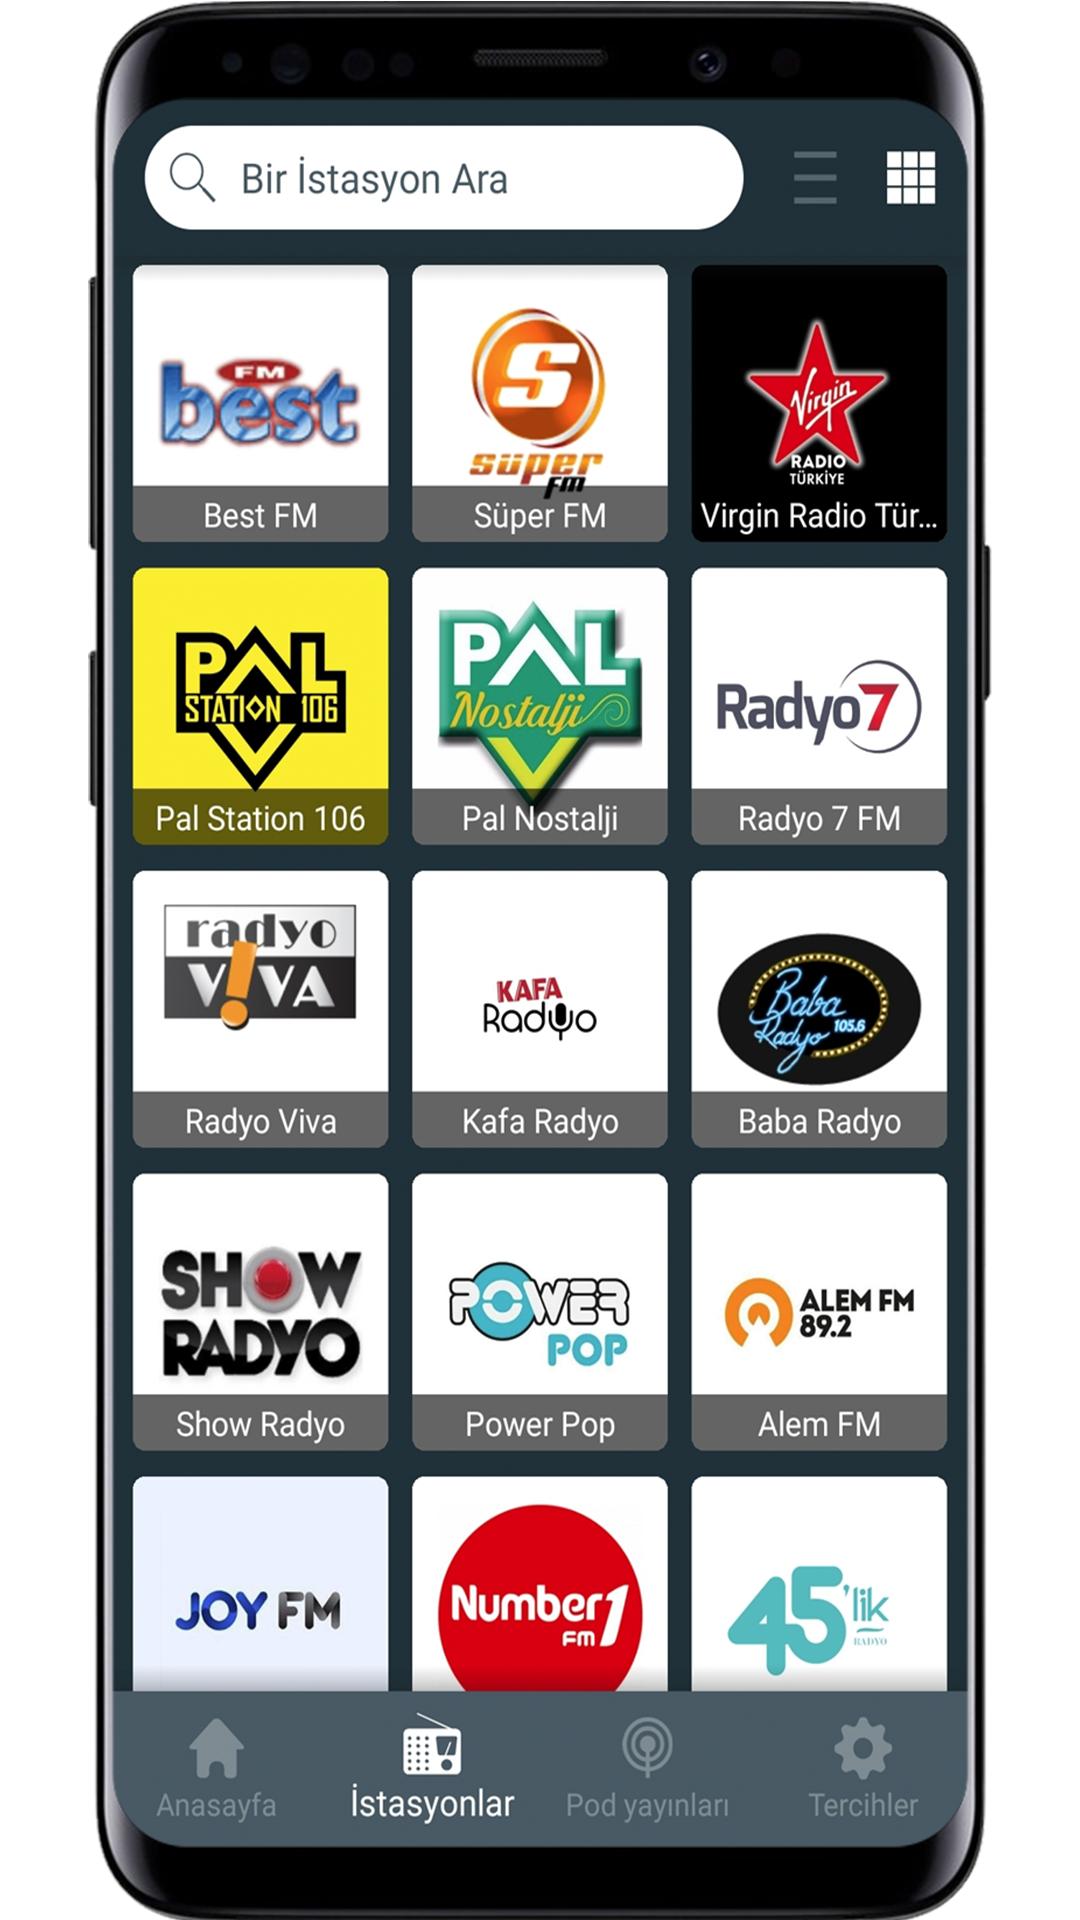 Radyo Türk - canlı radyo dinle for Android - APK Download